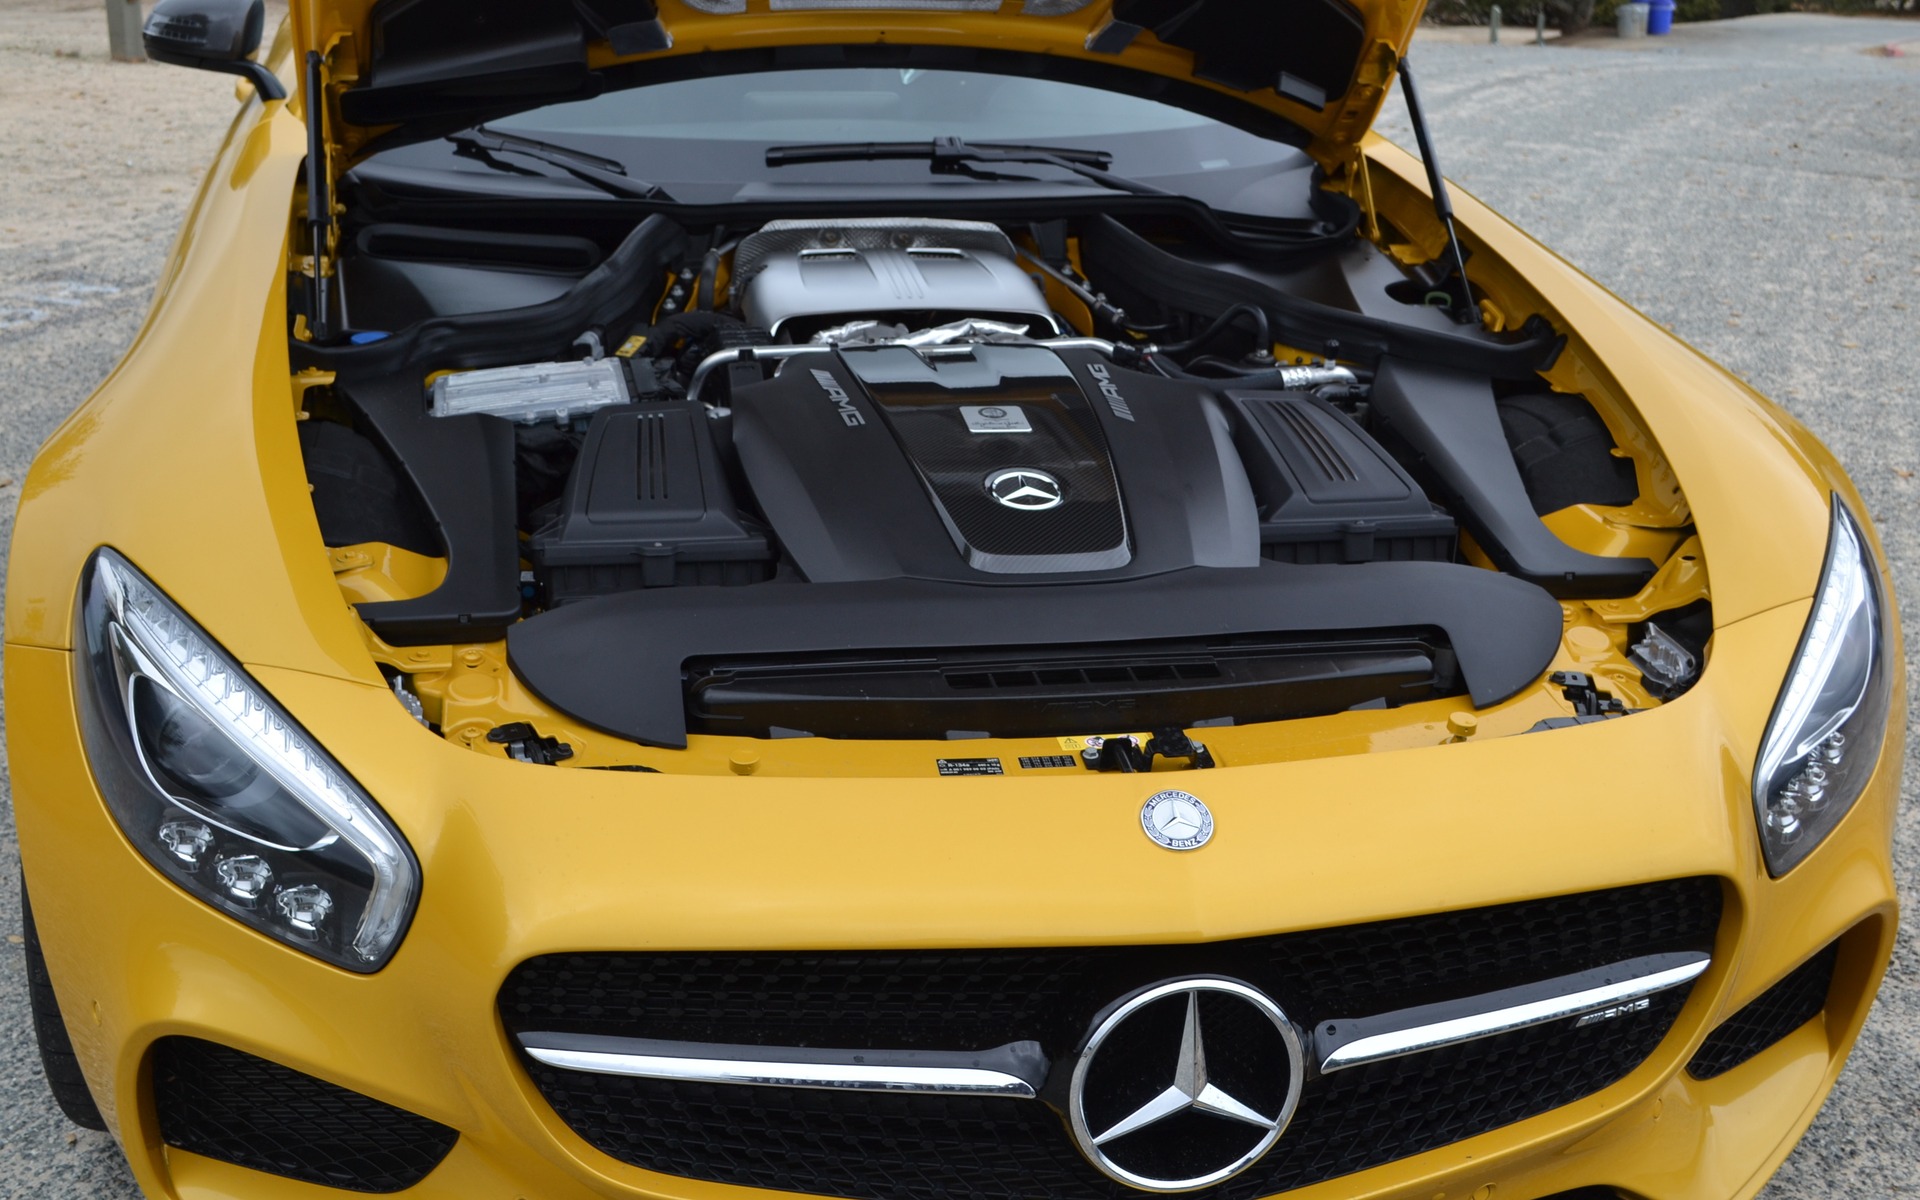 The new 4.0 litre twin-turbo V8 develops 462 hp in standard tune.